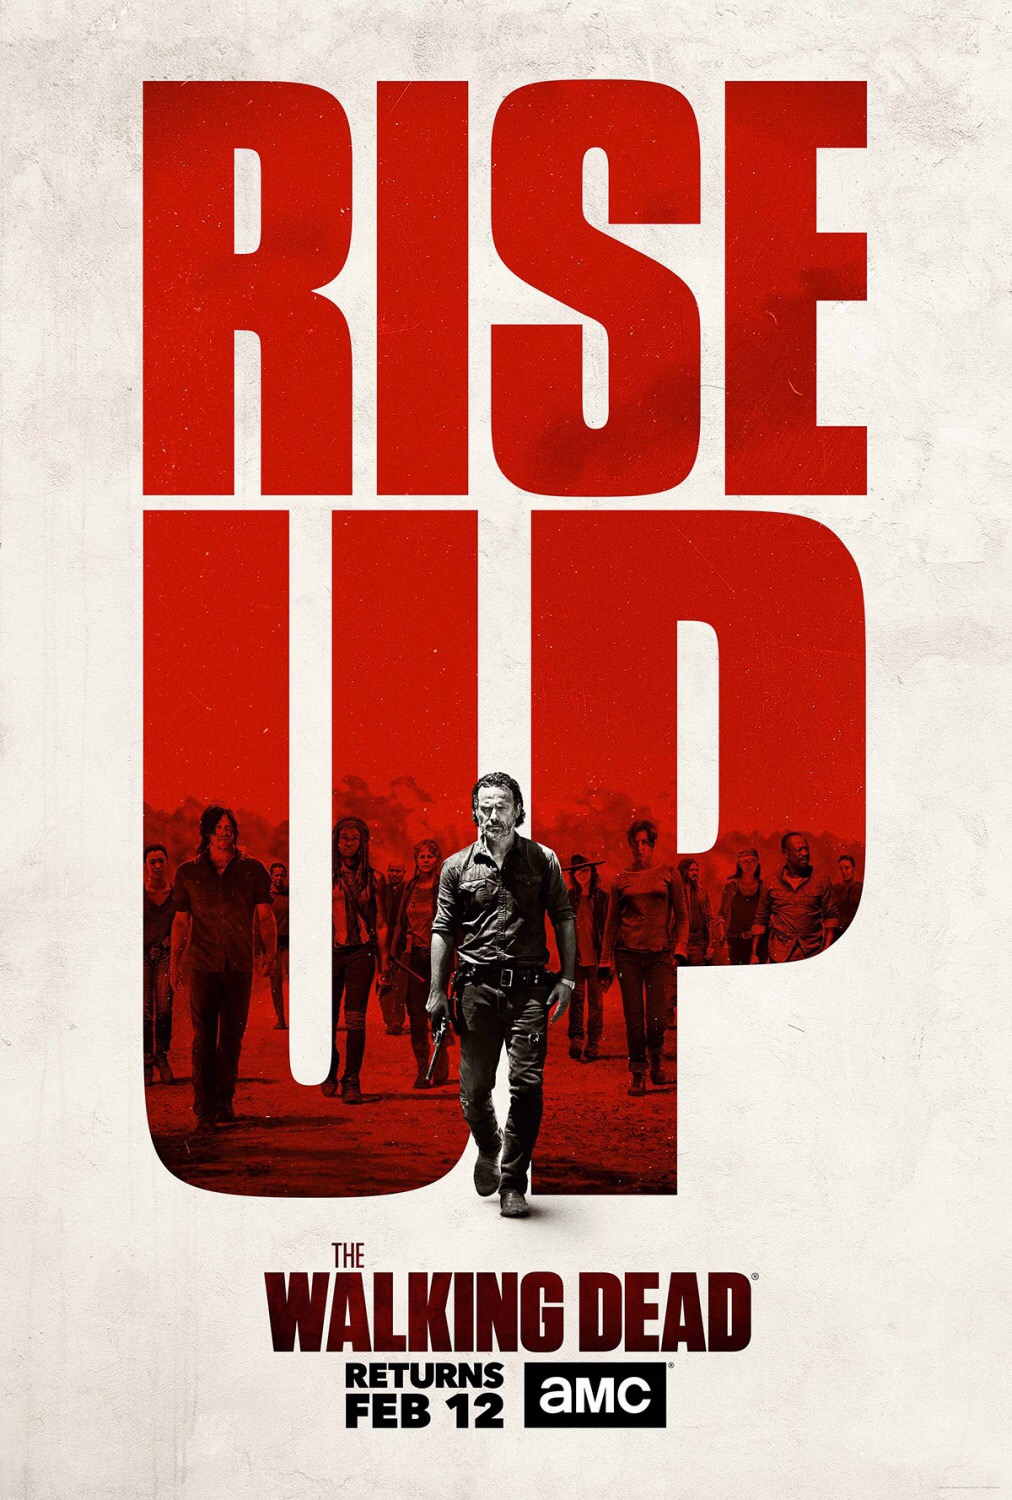 The dead return. The Walking Dead poster. The Walking Dead Rise up.